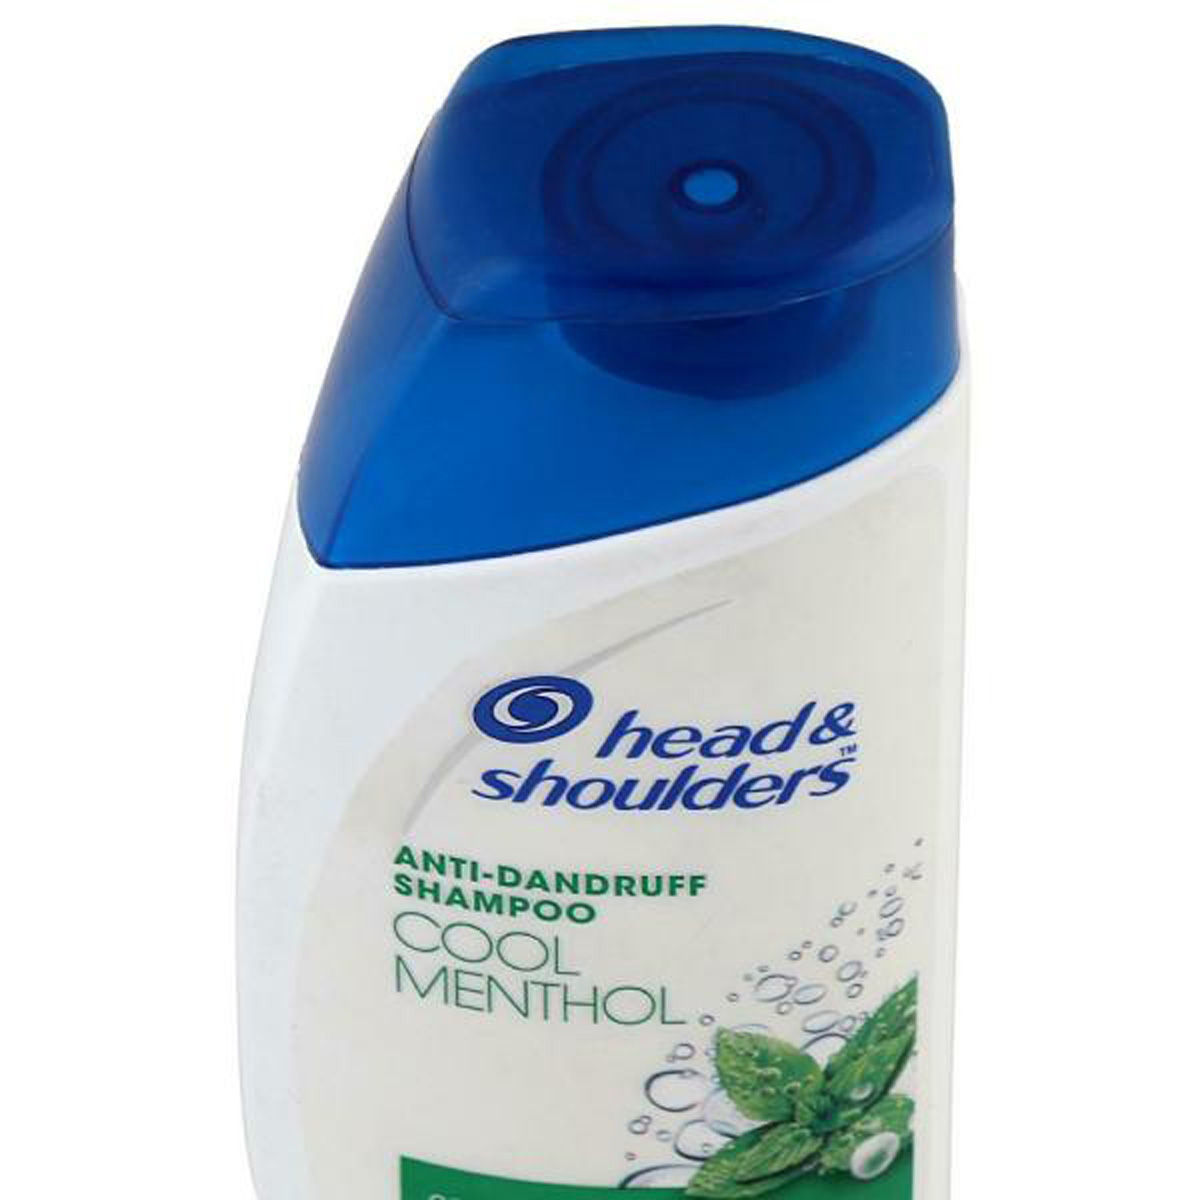 Head & Shoulders Anti-Dandruff Max Cool Shampoo, 180 ml, Pack of 1 